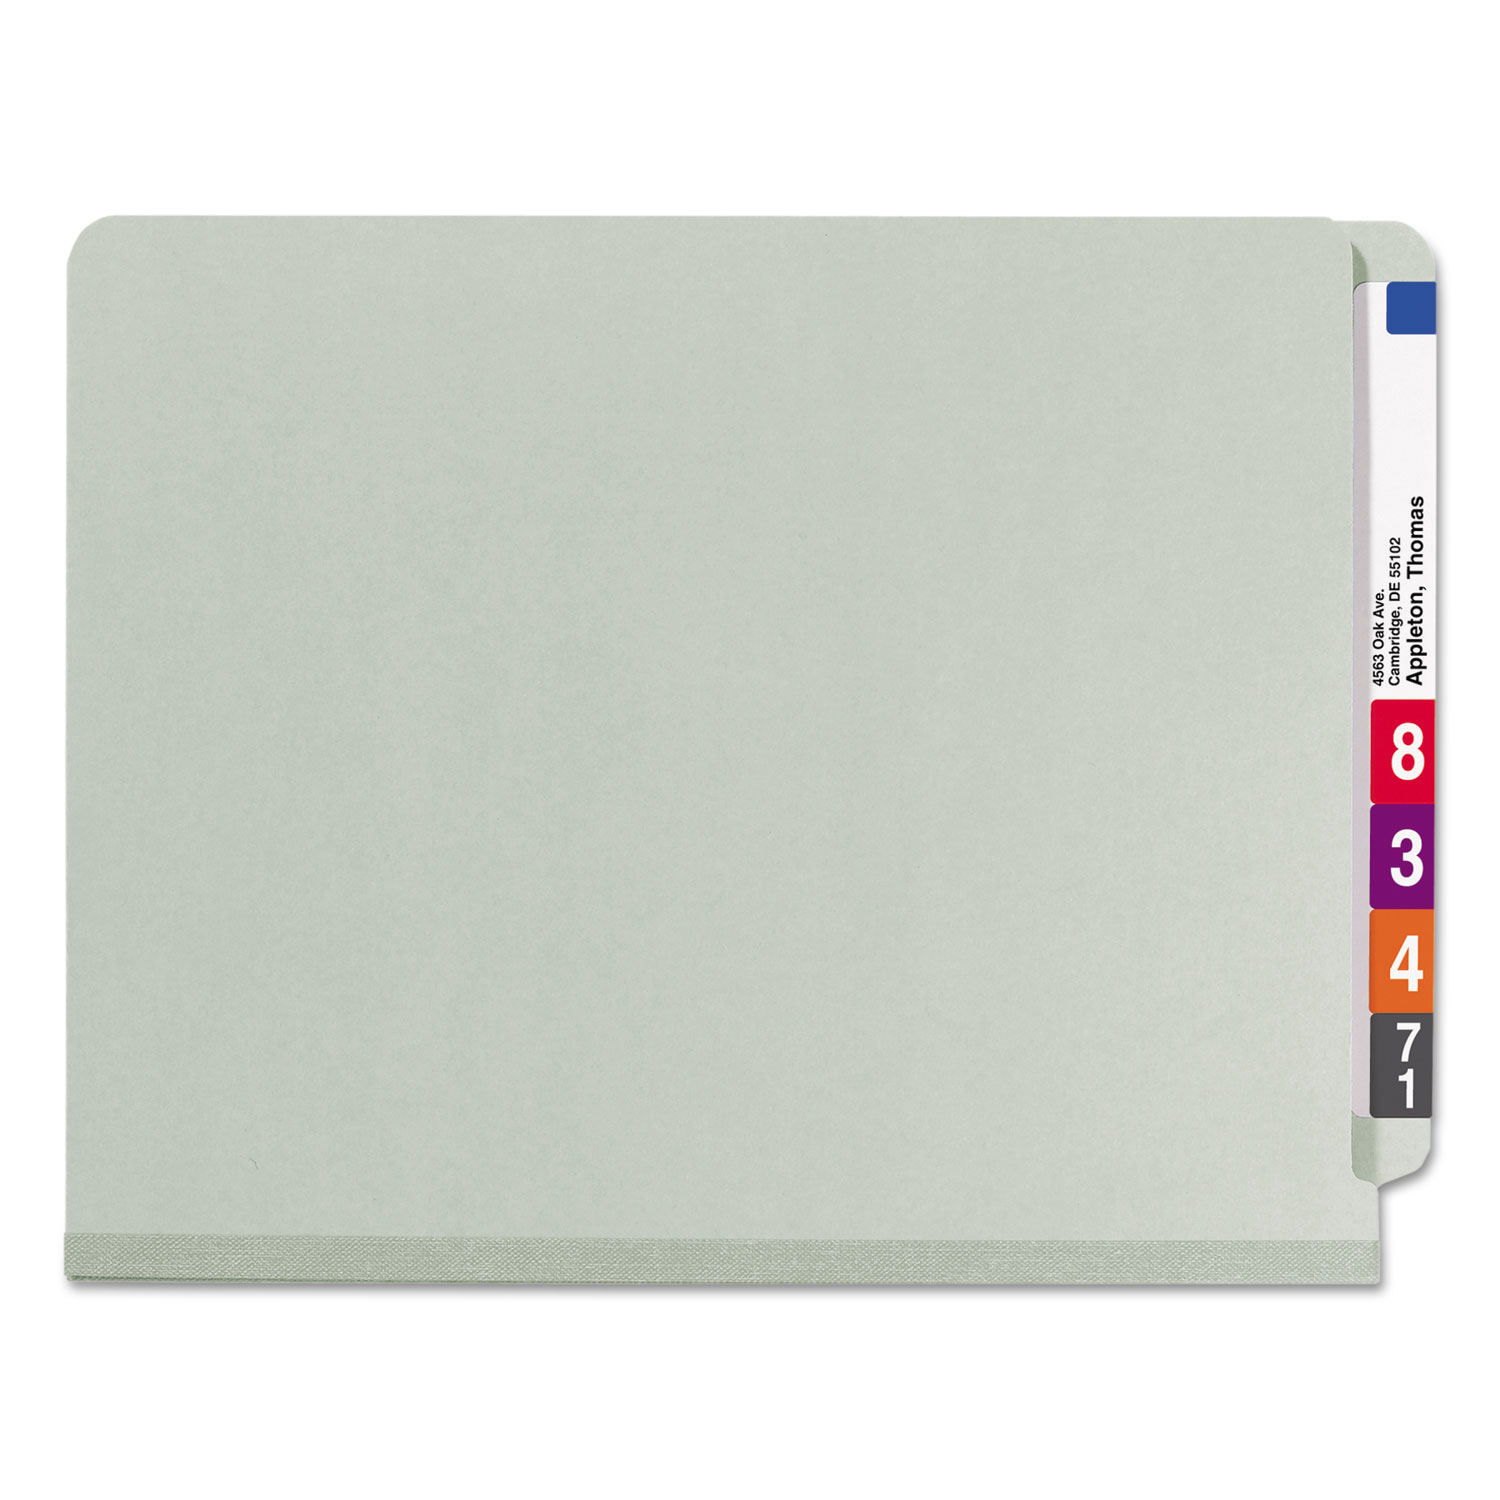 Pressboard End Tab Classification Folder, Letter, 6-Section, Gray/Green, 10/Box